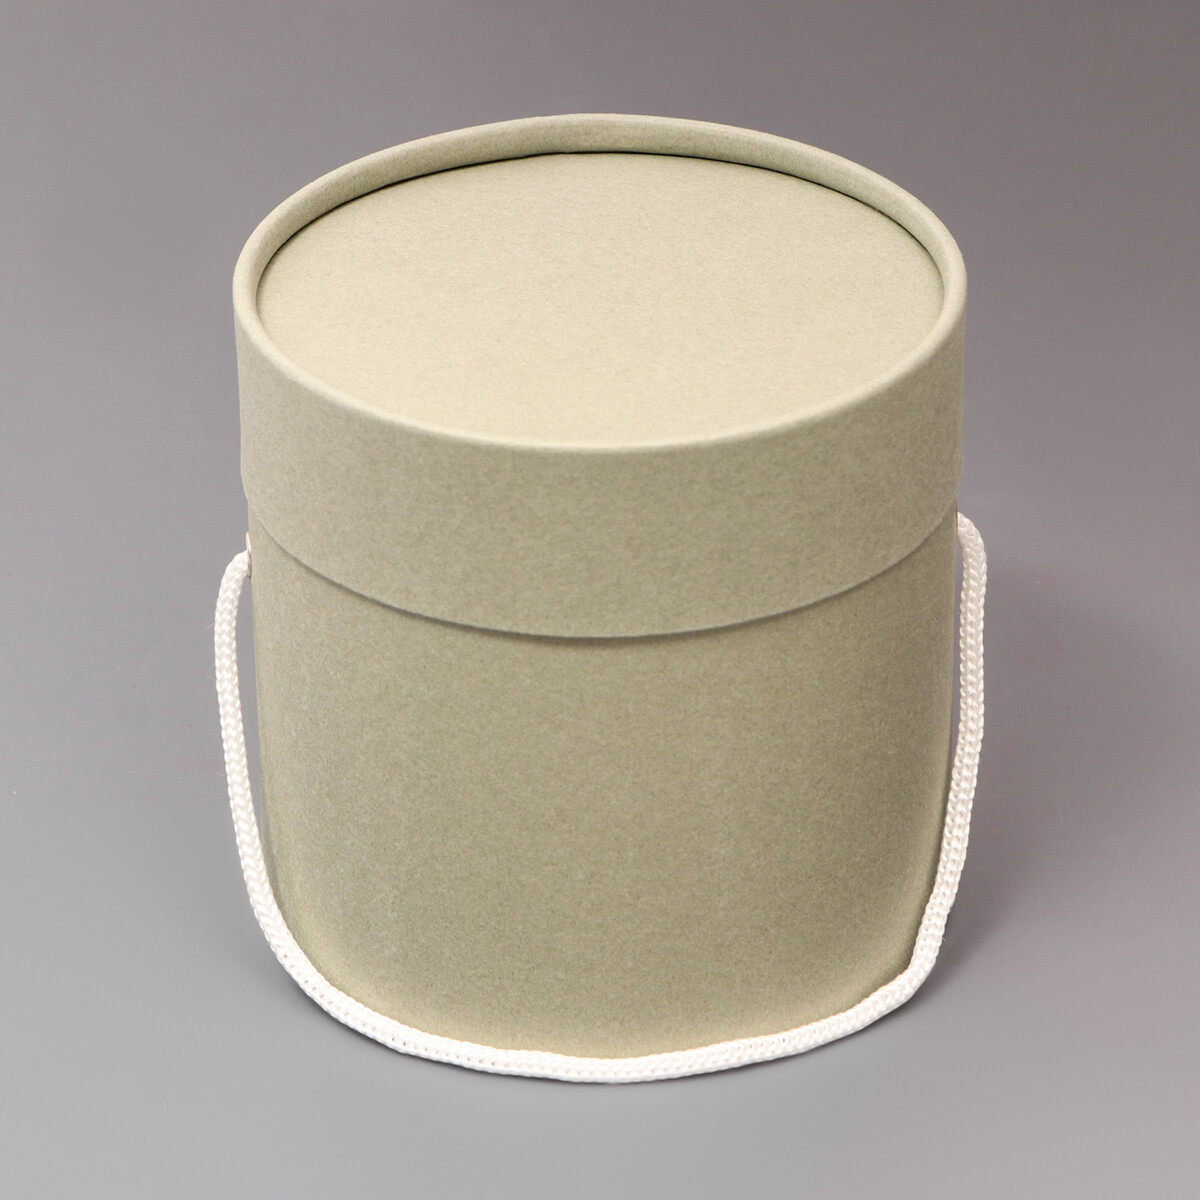 Подарочная коробка, круглая, серая,с шнурком, 12 х 12 см тарелка суповая керамика 24 см 1 4 л круглая дюна daniks a15397sh0479 серая